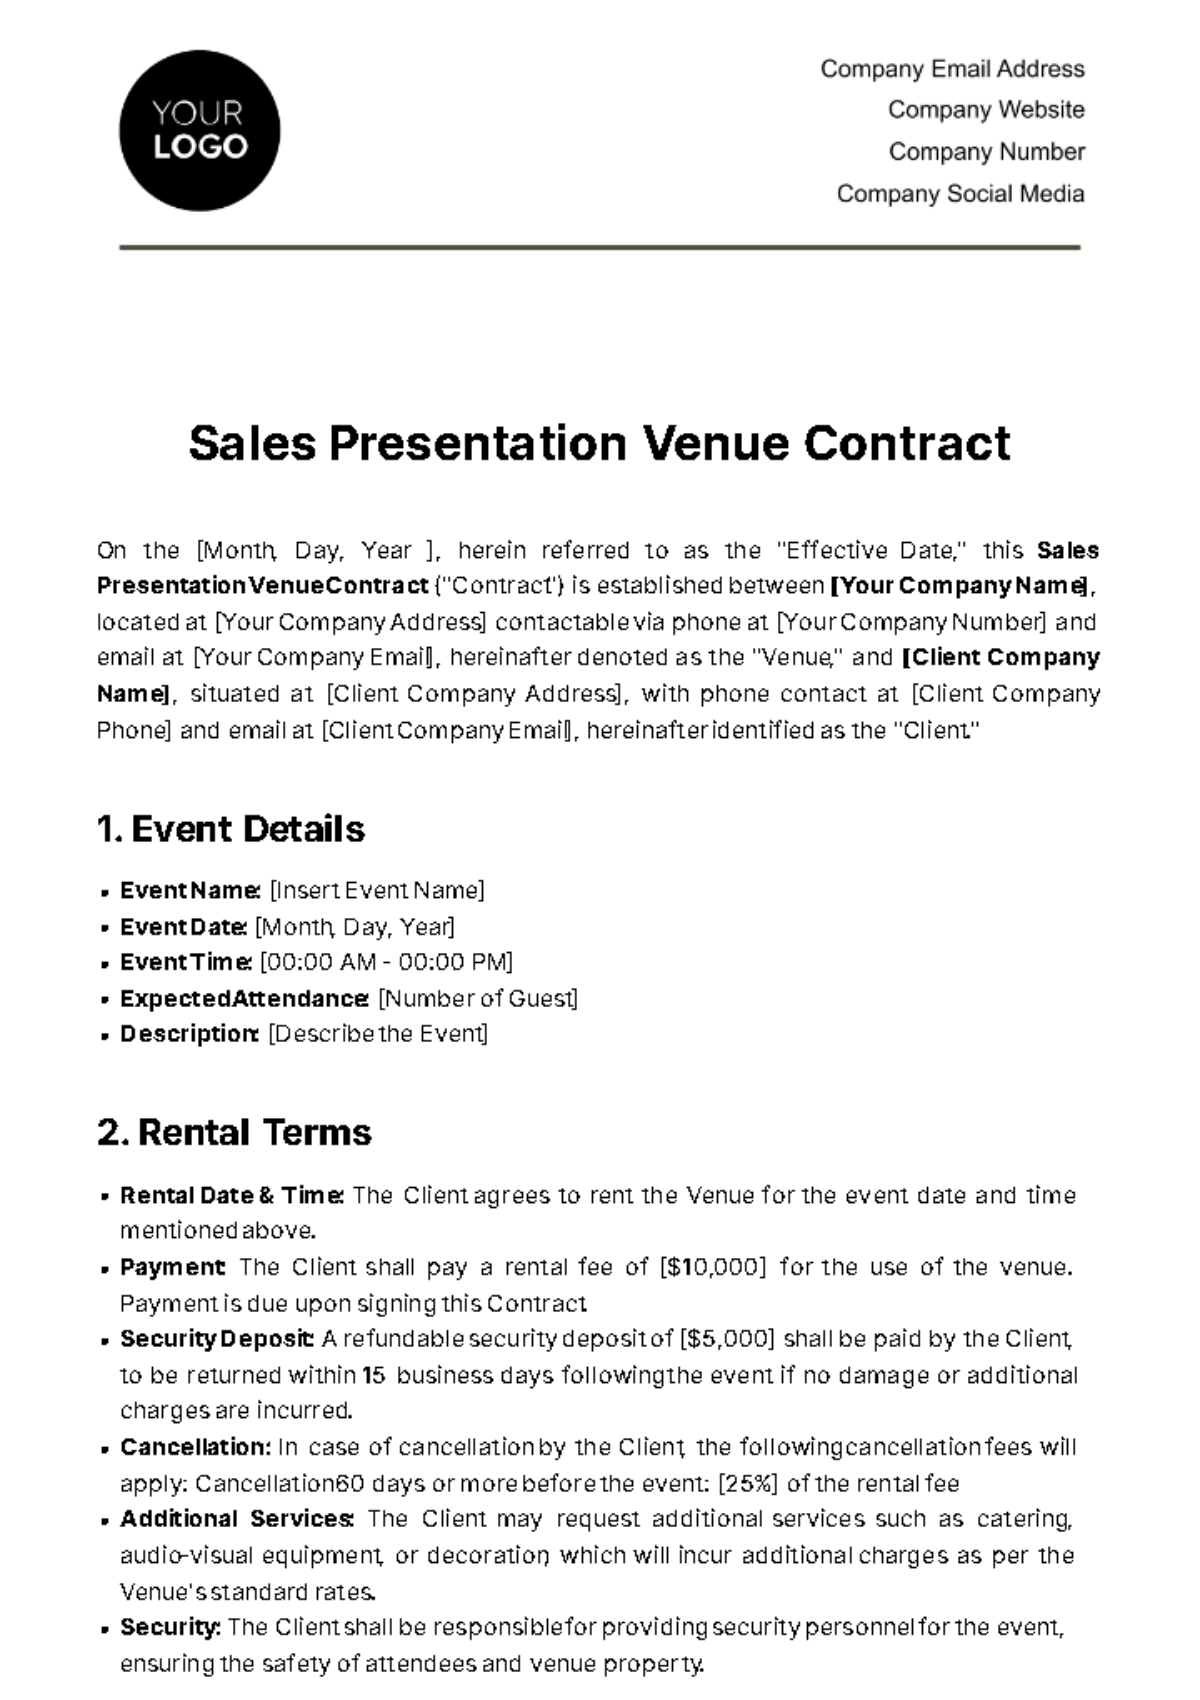 Free Sales Presentation Venue Contract Template